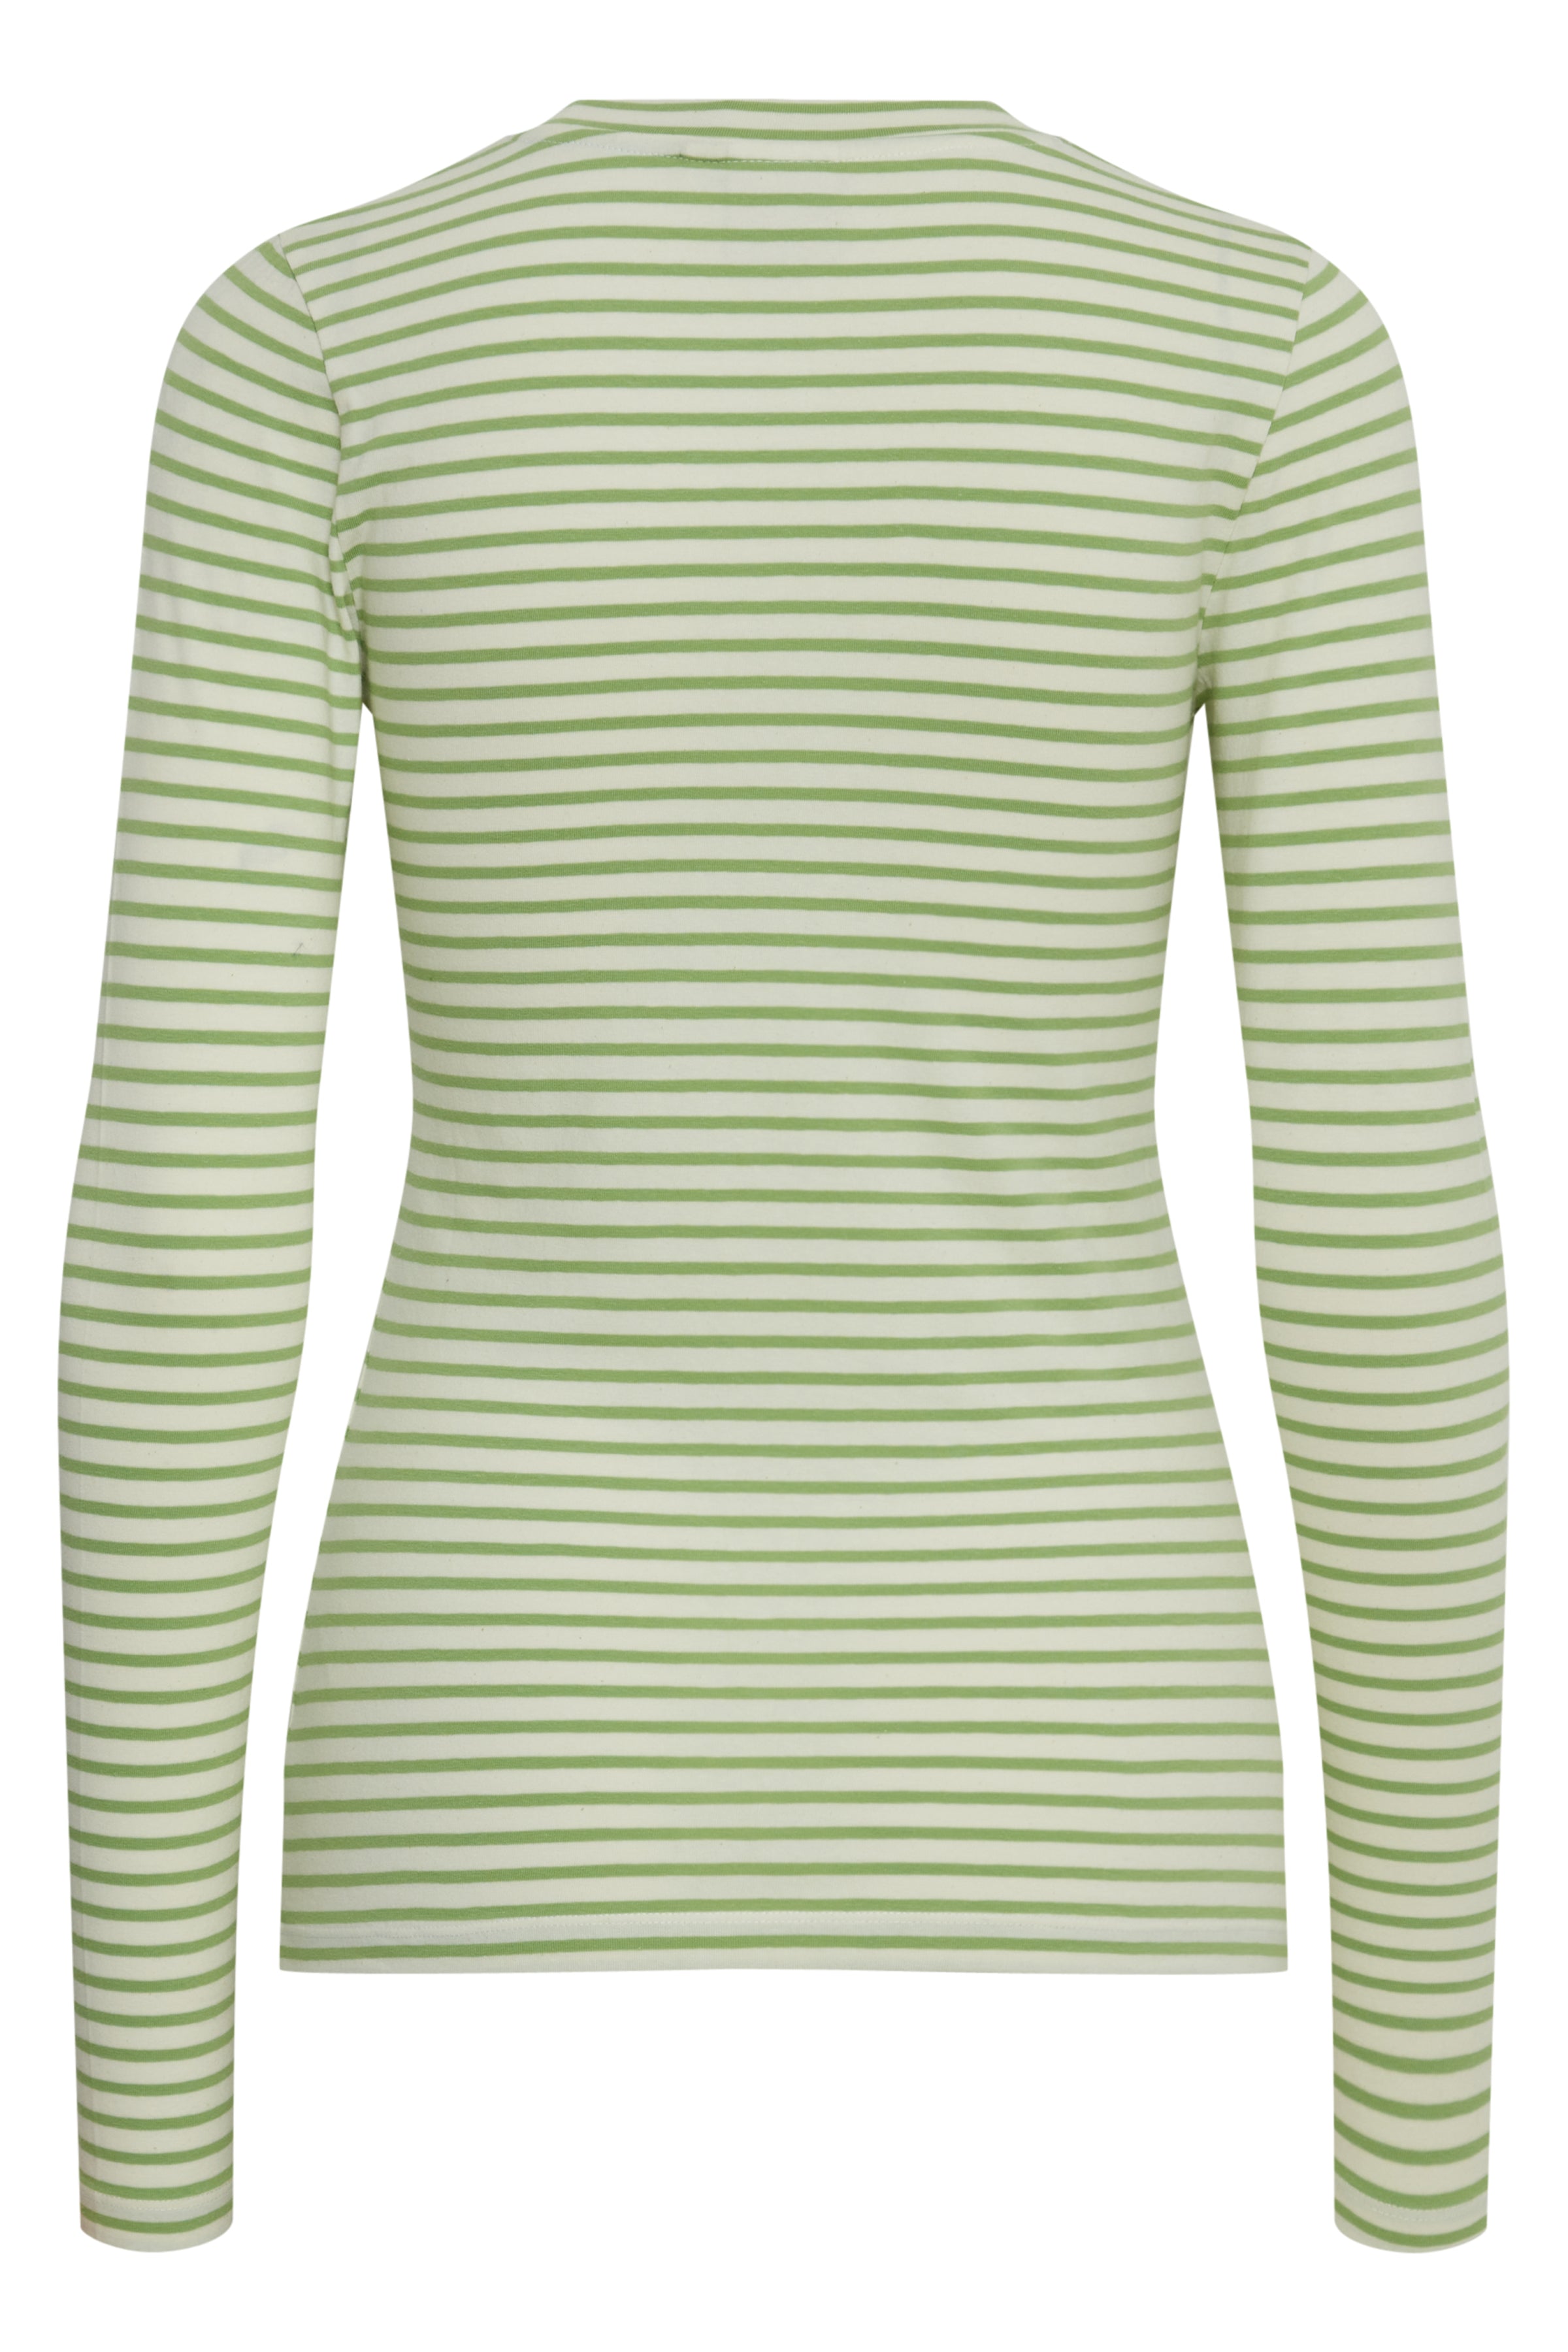 IHMira Long Sleeve T Shirt  - Green Tea Stripe